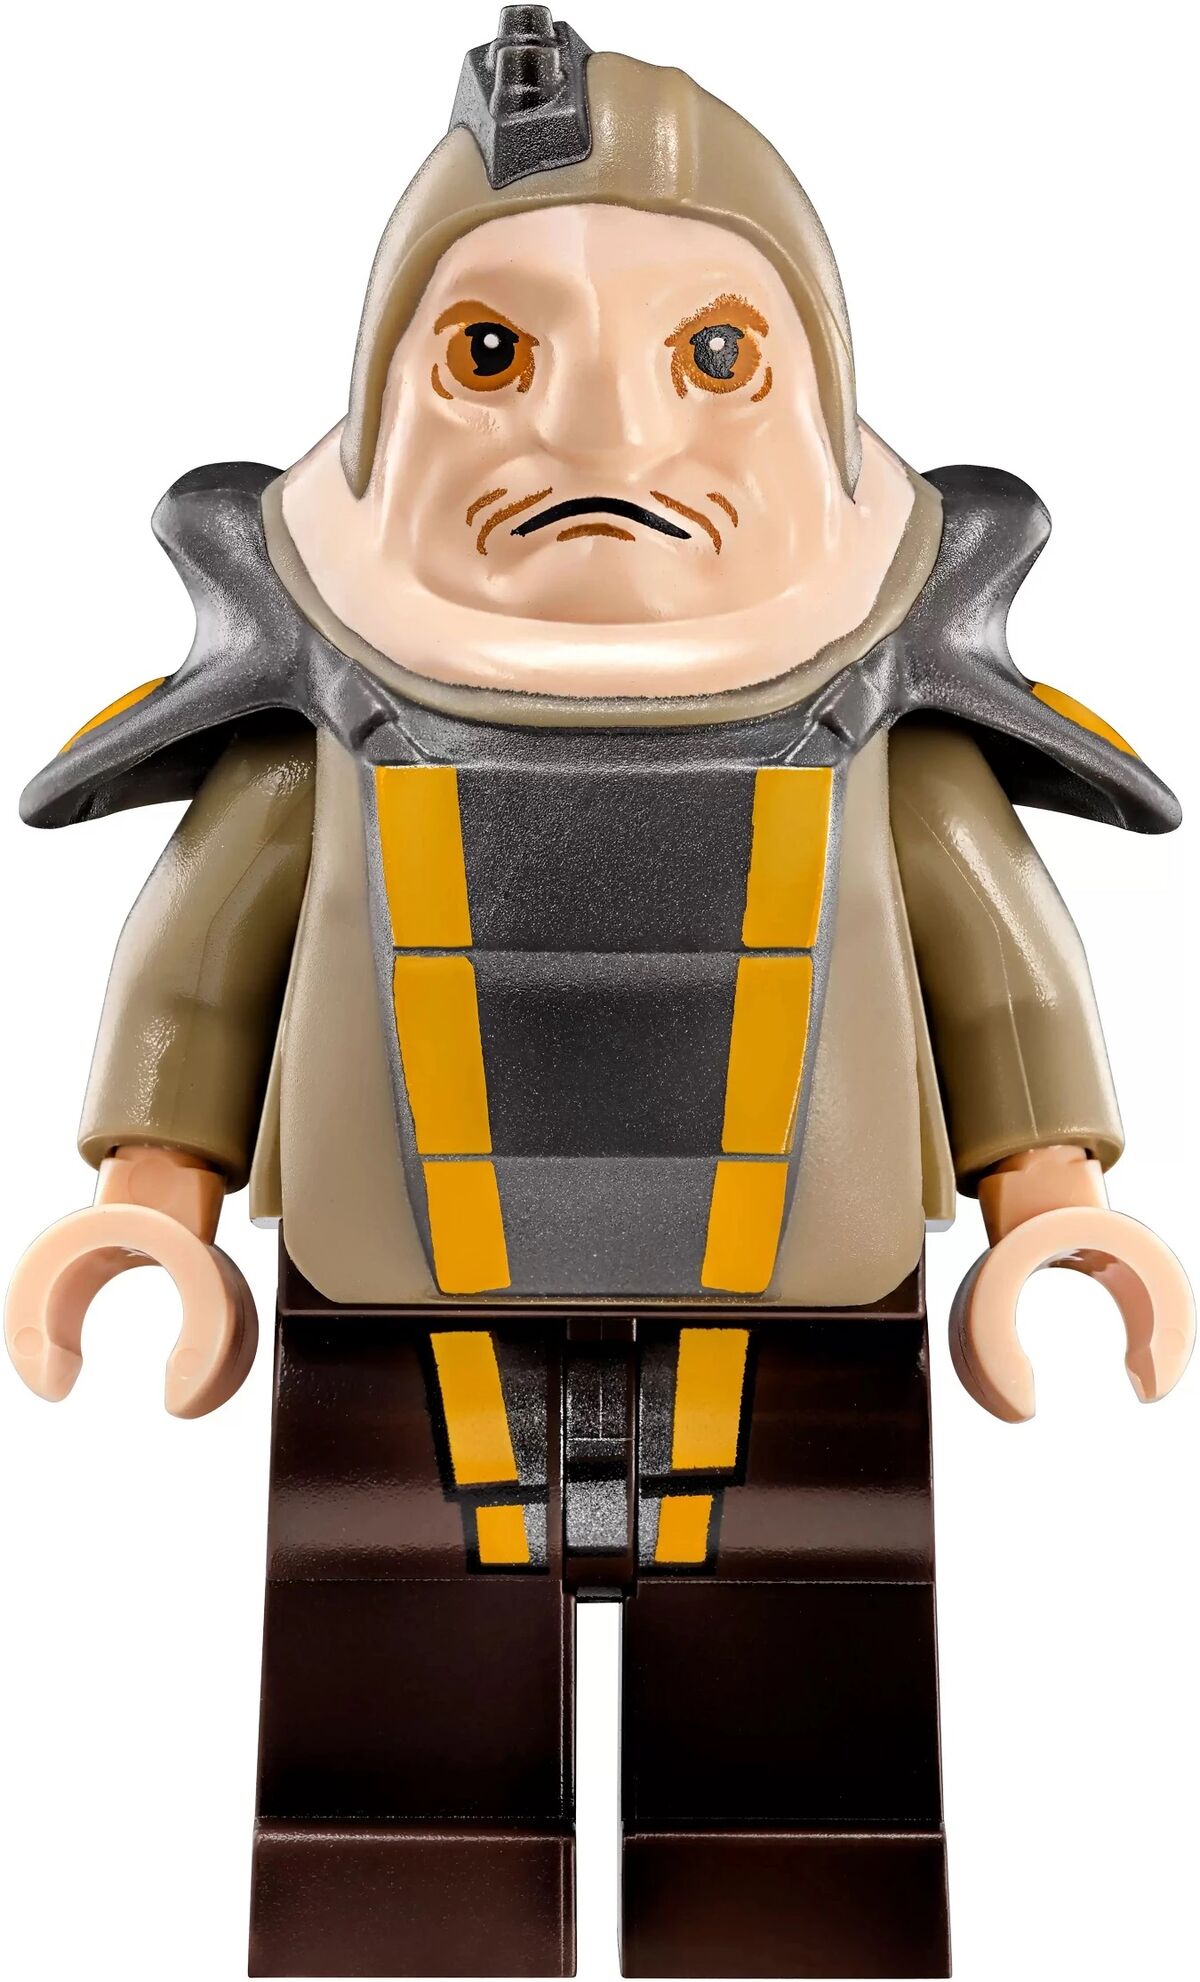 Minifigure LEGO® Star Wars - Unkar's Thug - Super Briques